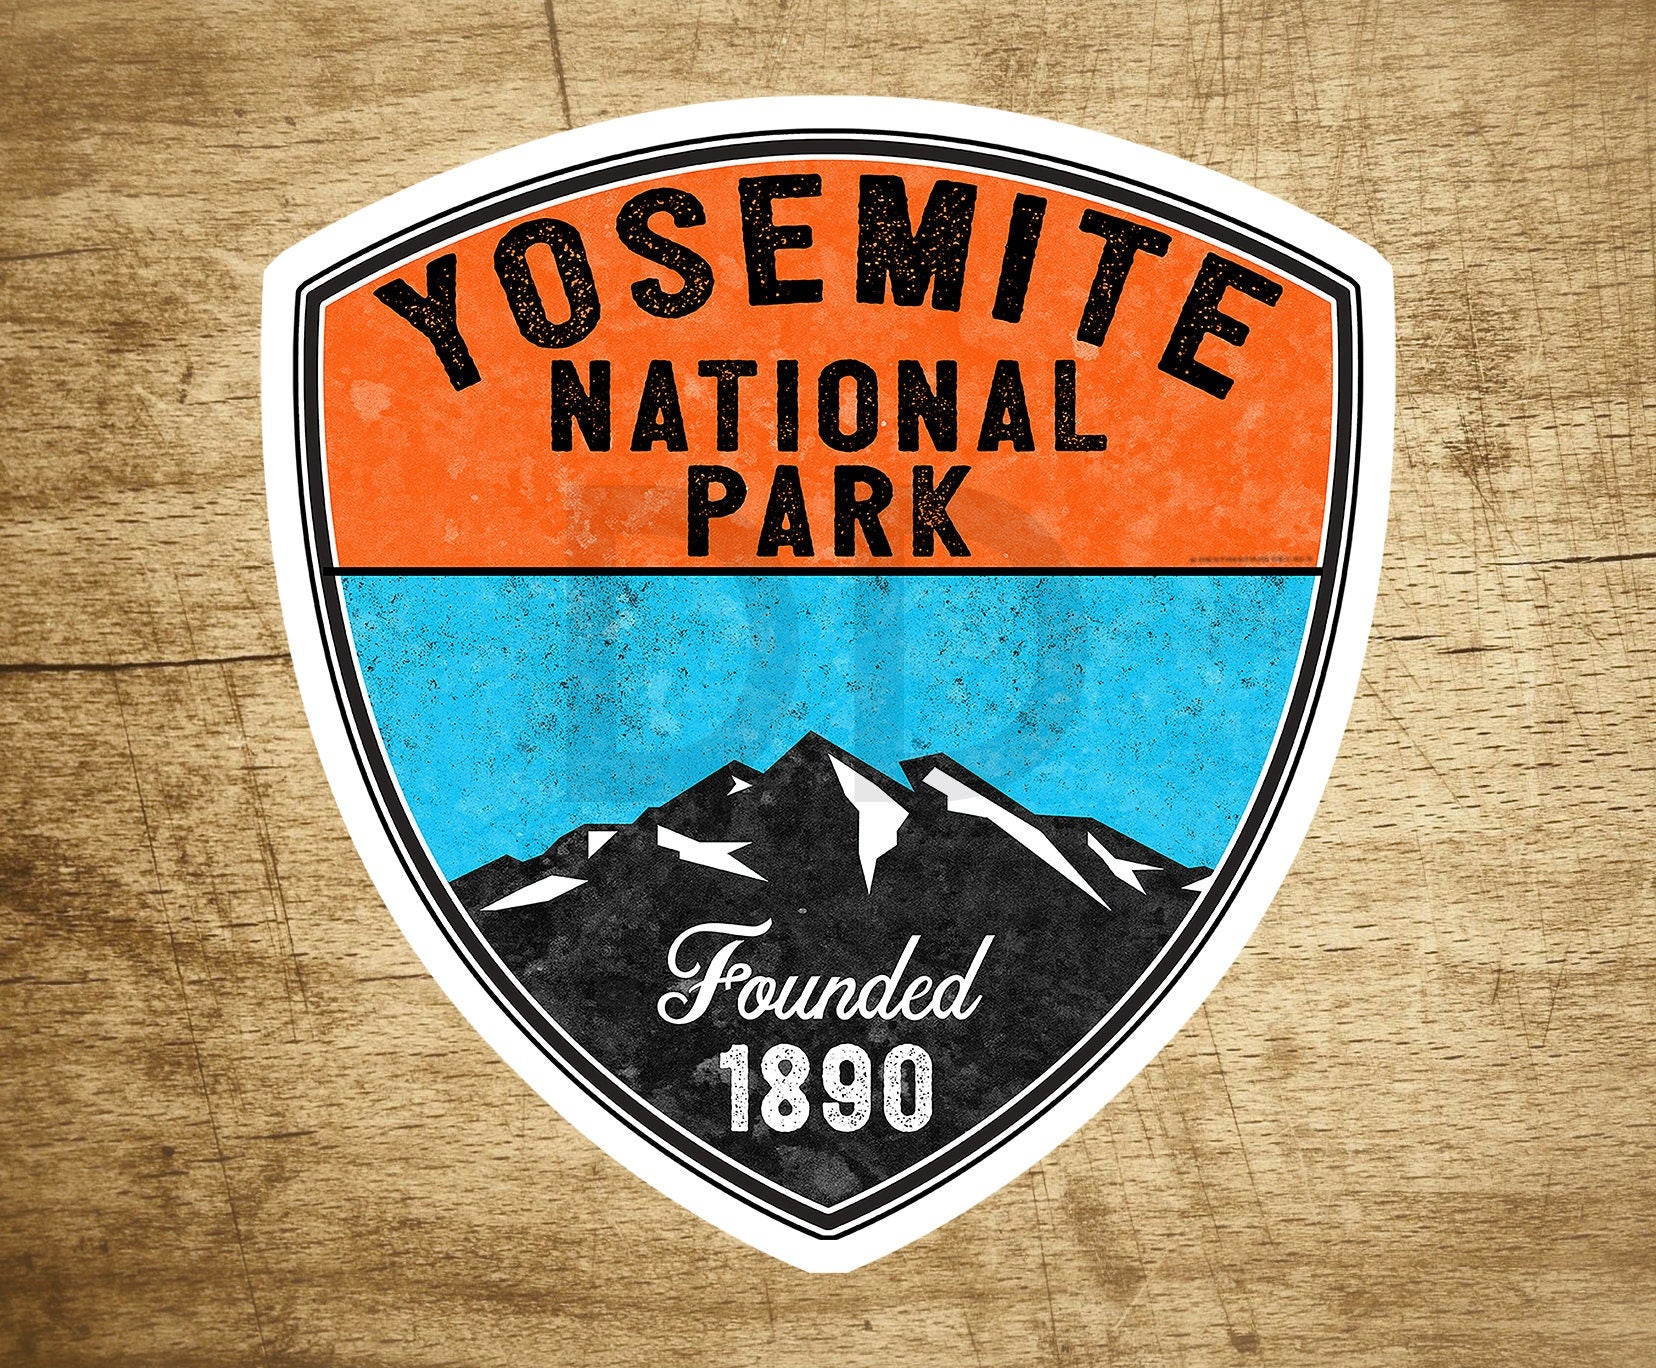 YOSEMITE NATIONAL PARK California Vinyl Sticker Bear Mountain Hiking Camping Climbing Decal 3"